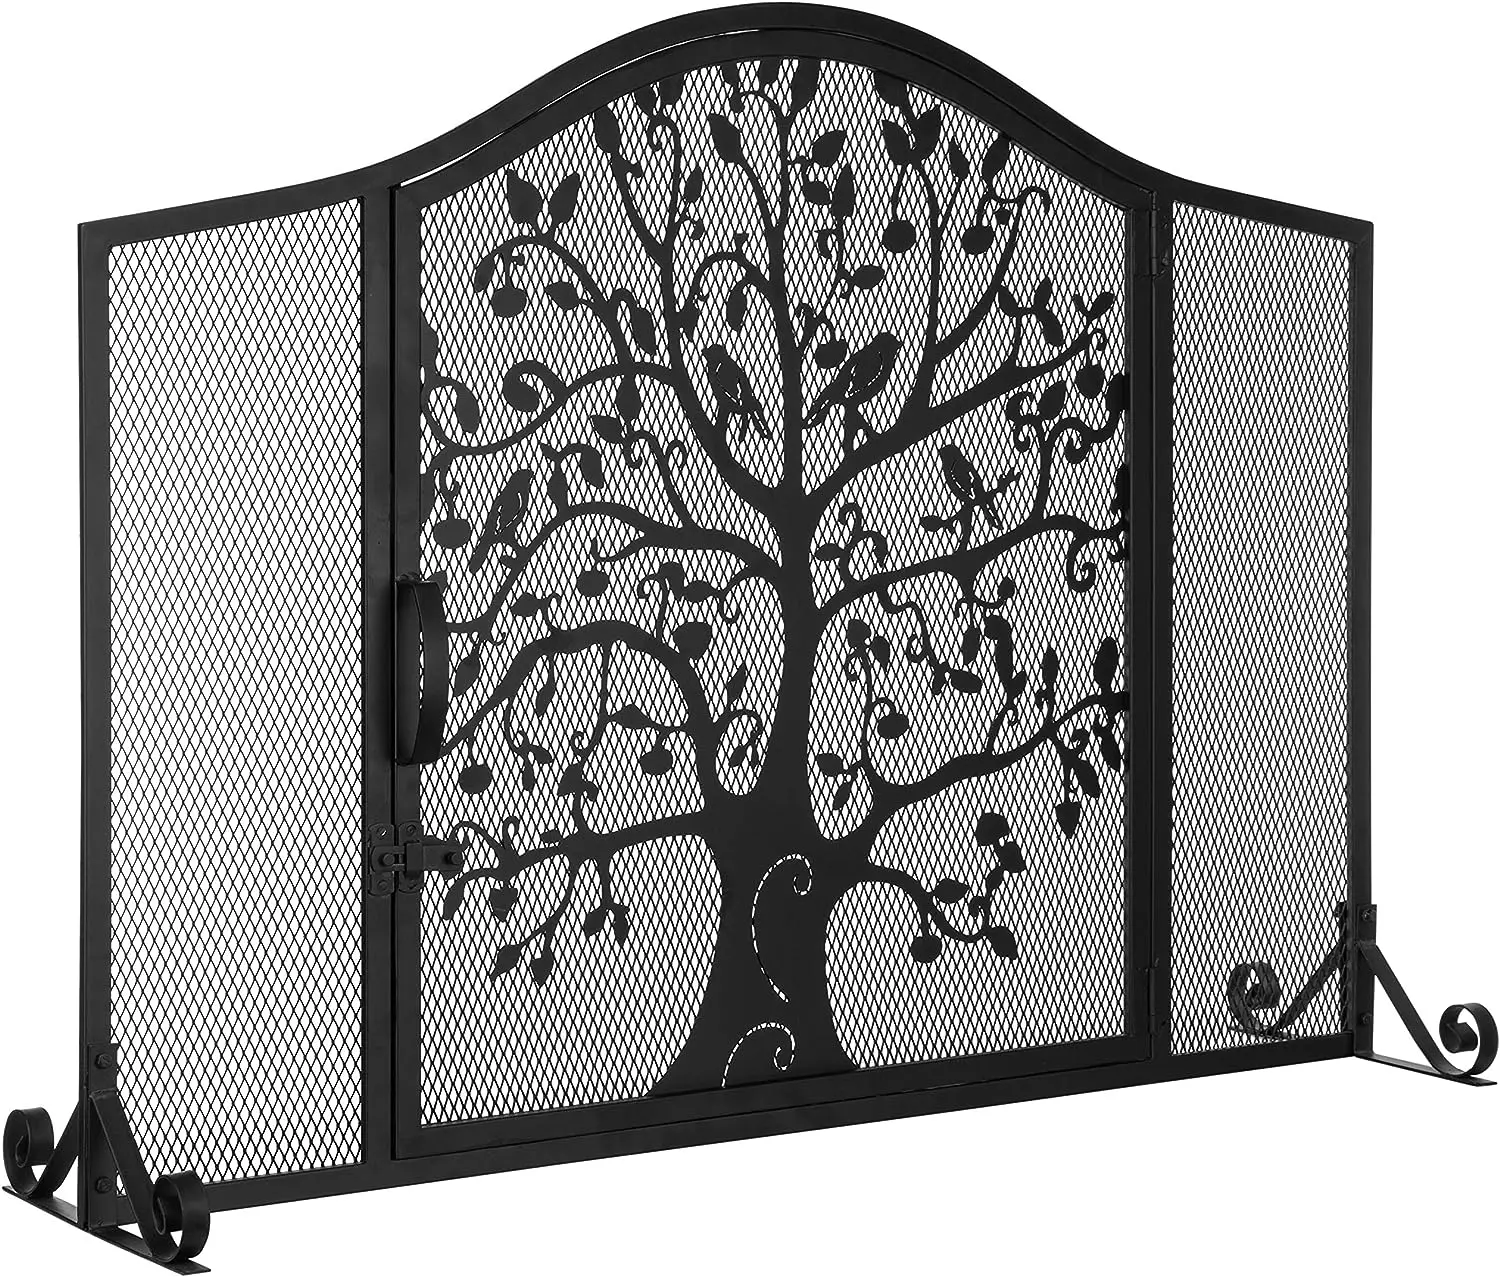 

Wrought Iron Fireplace Screen Door with Silhouette Tree & Bird Design